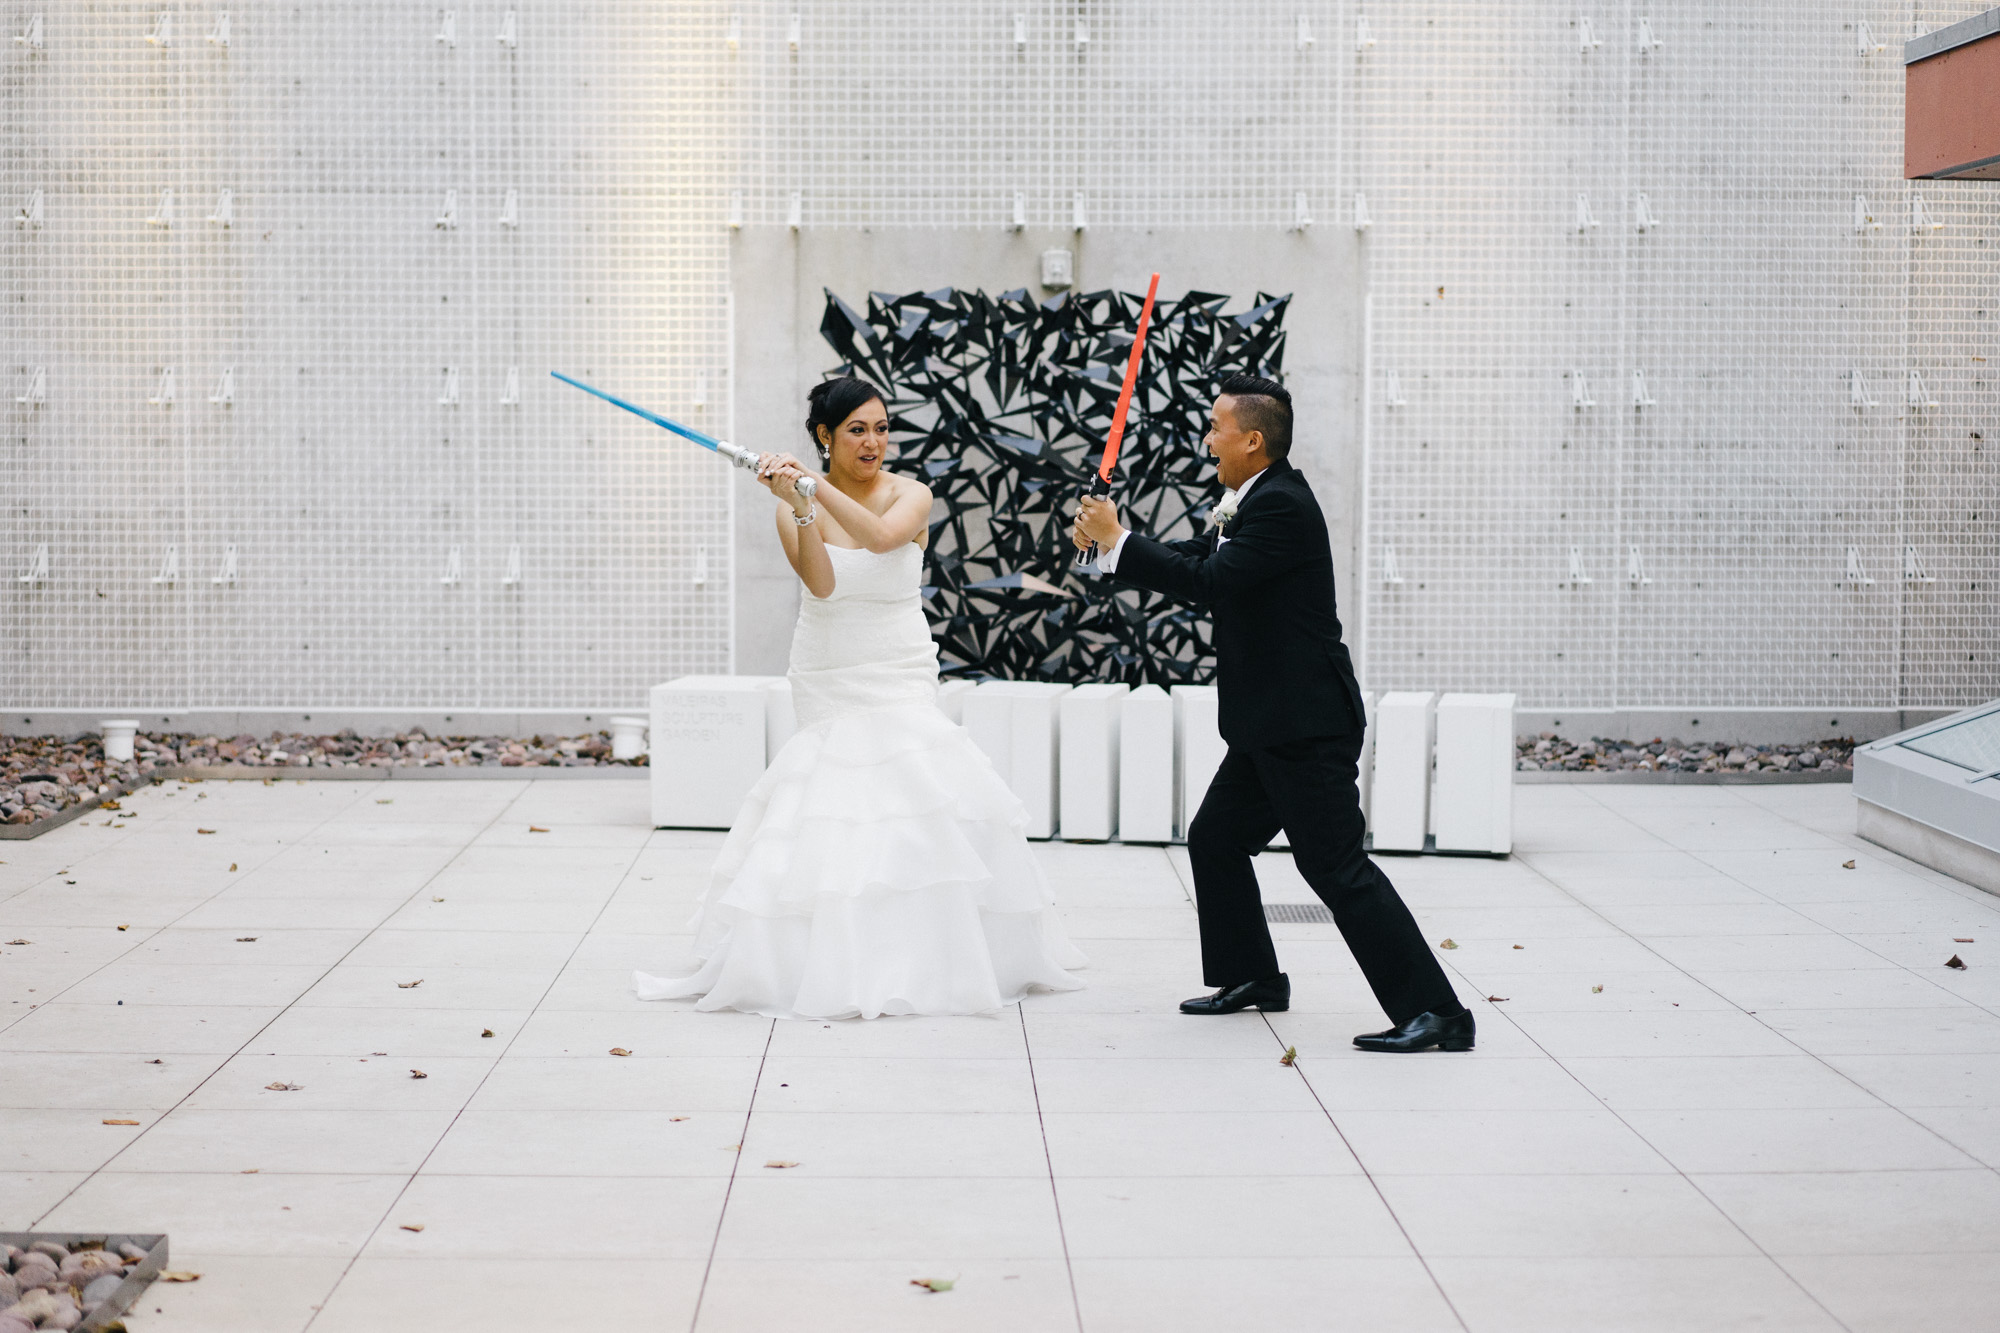 Star Wars Bride and Groom